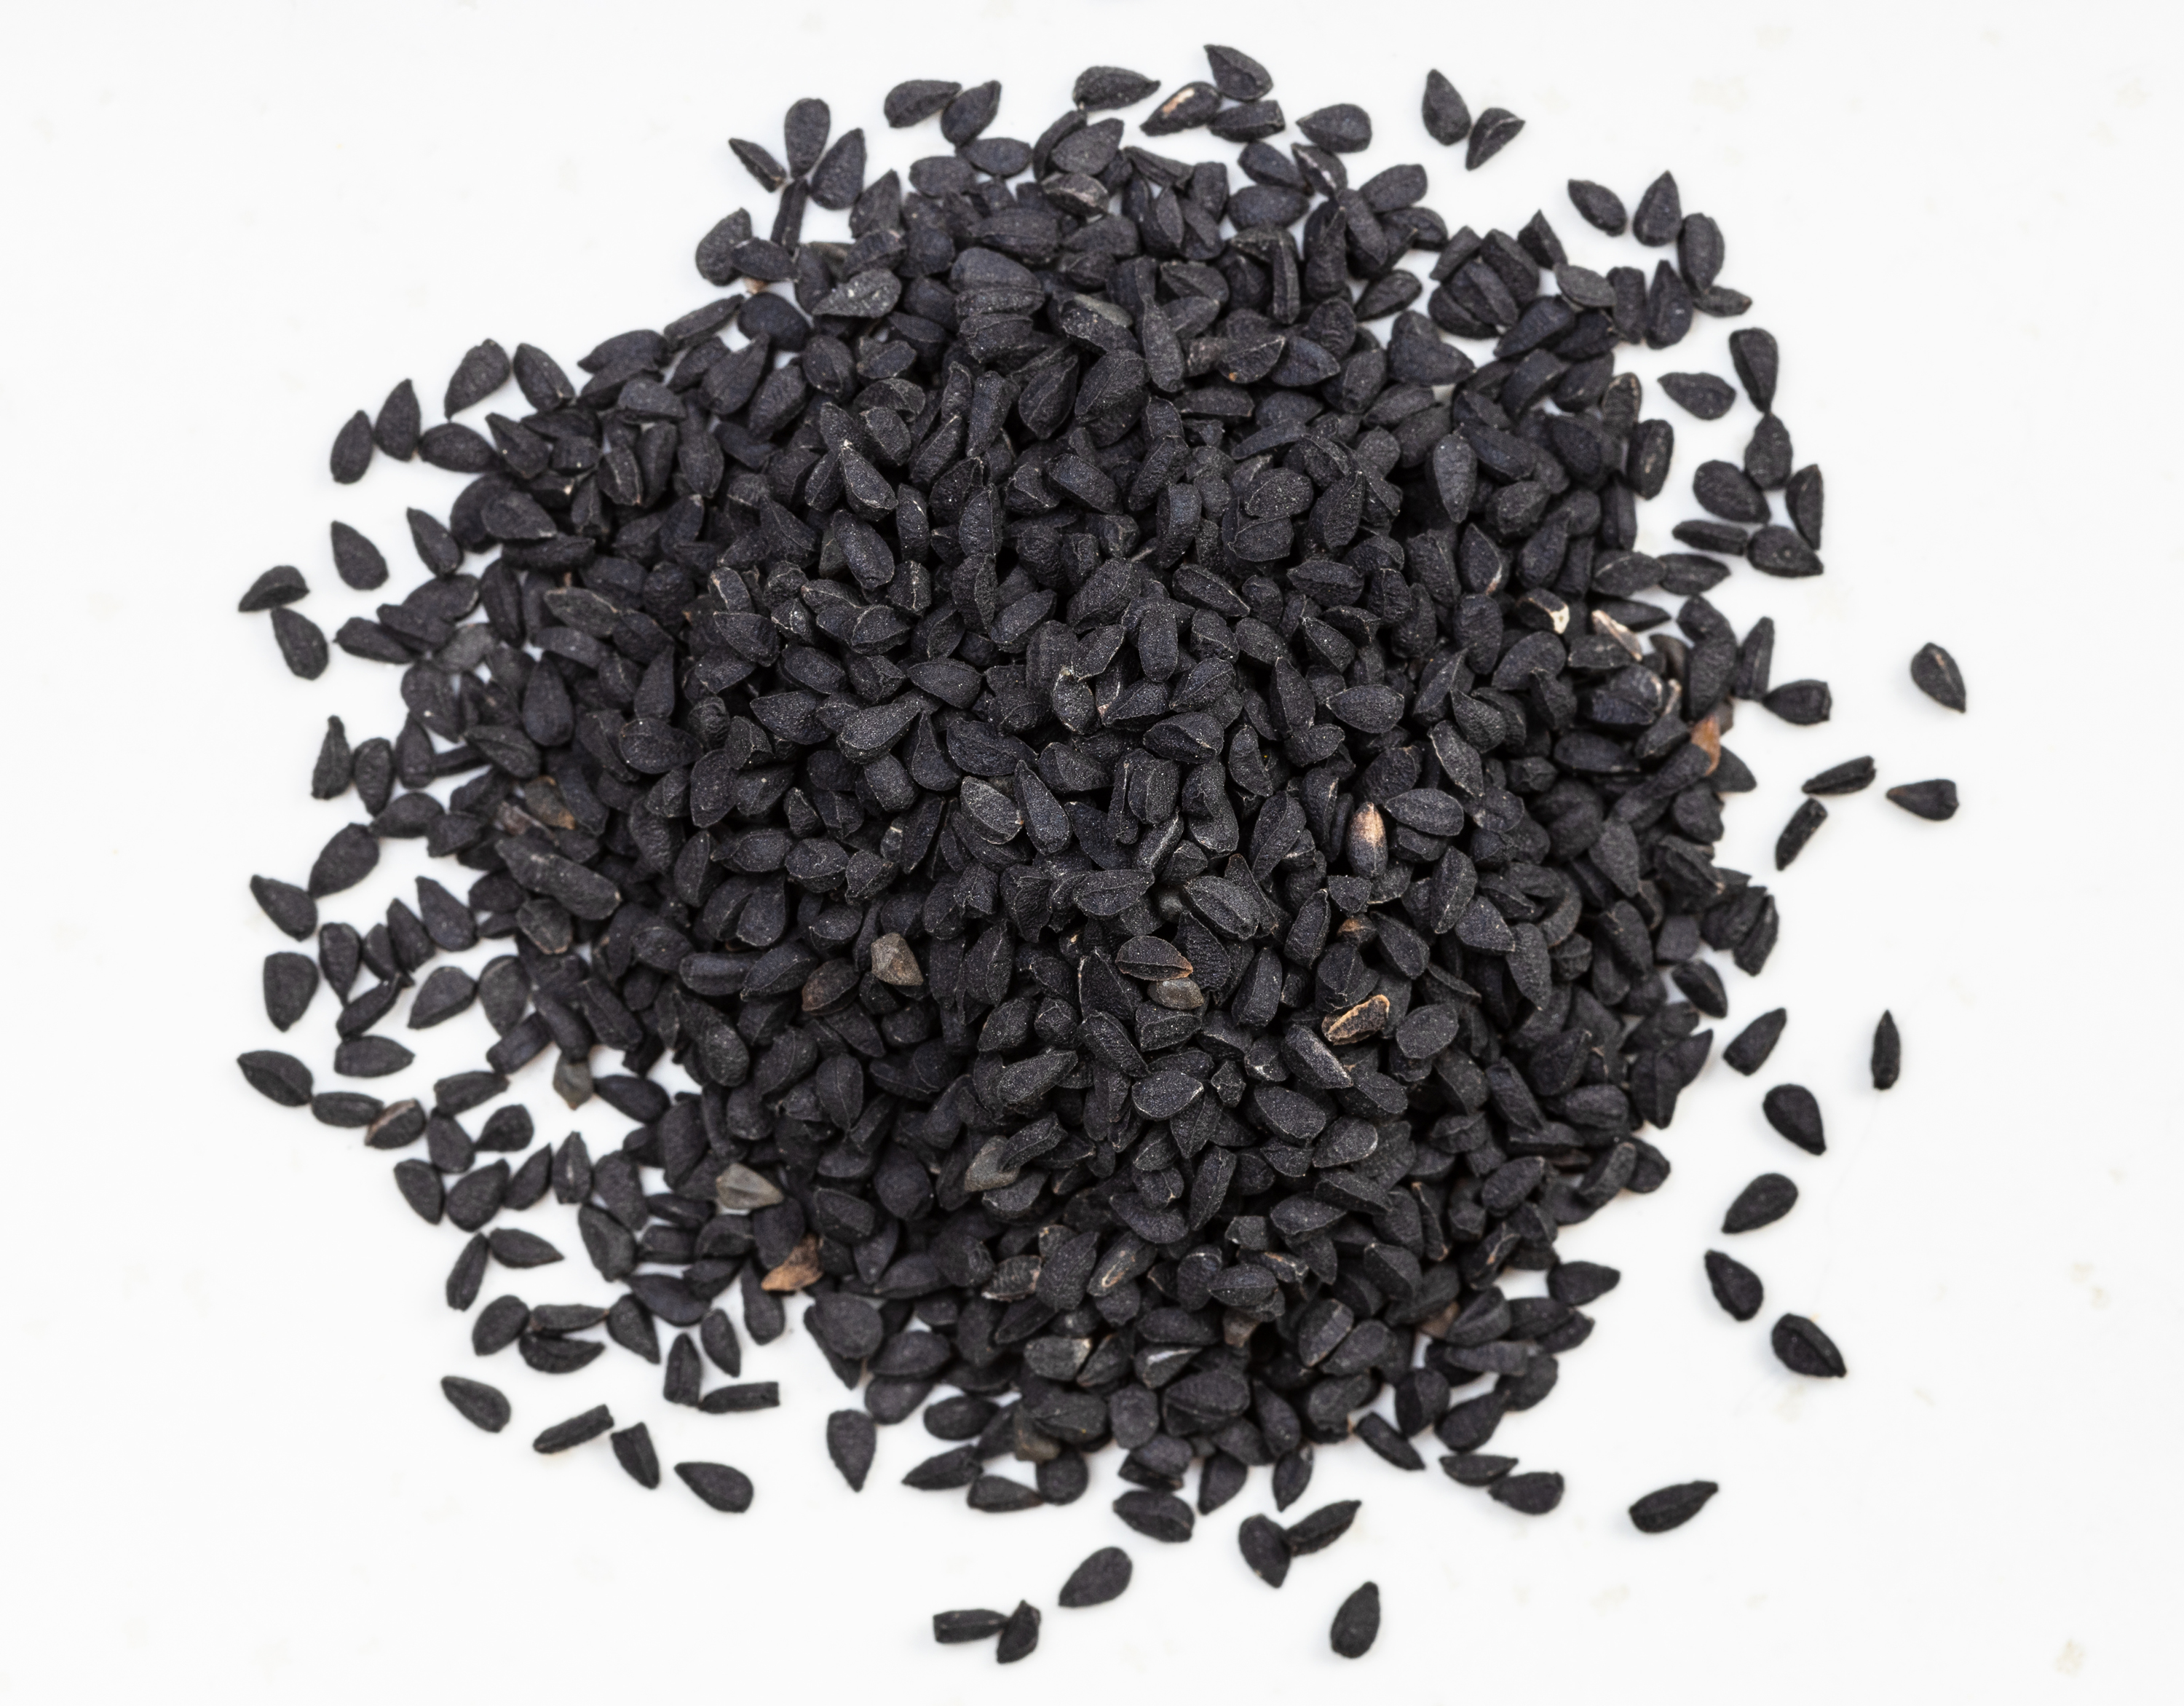 Black Cumin Extract (Nigella sativa)